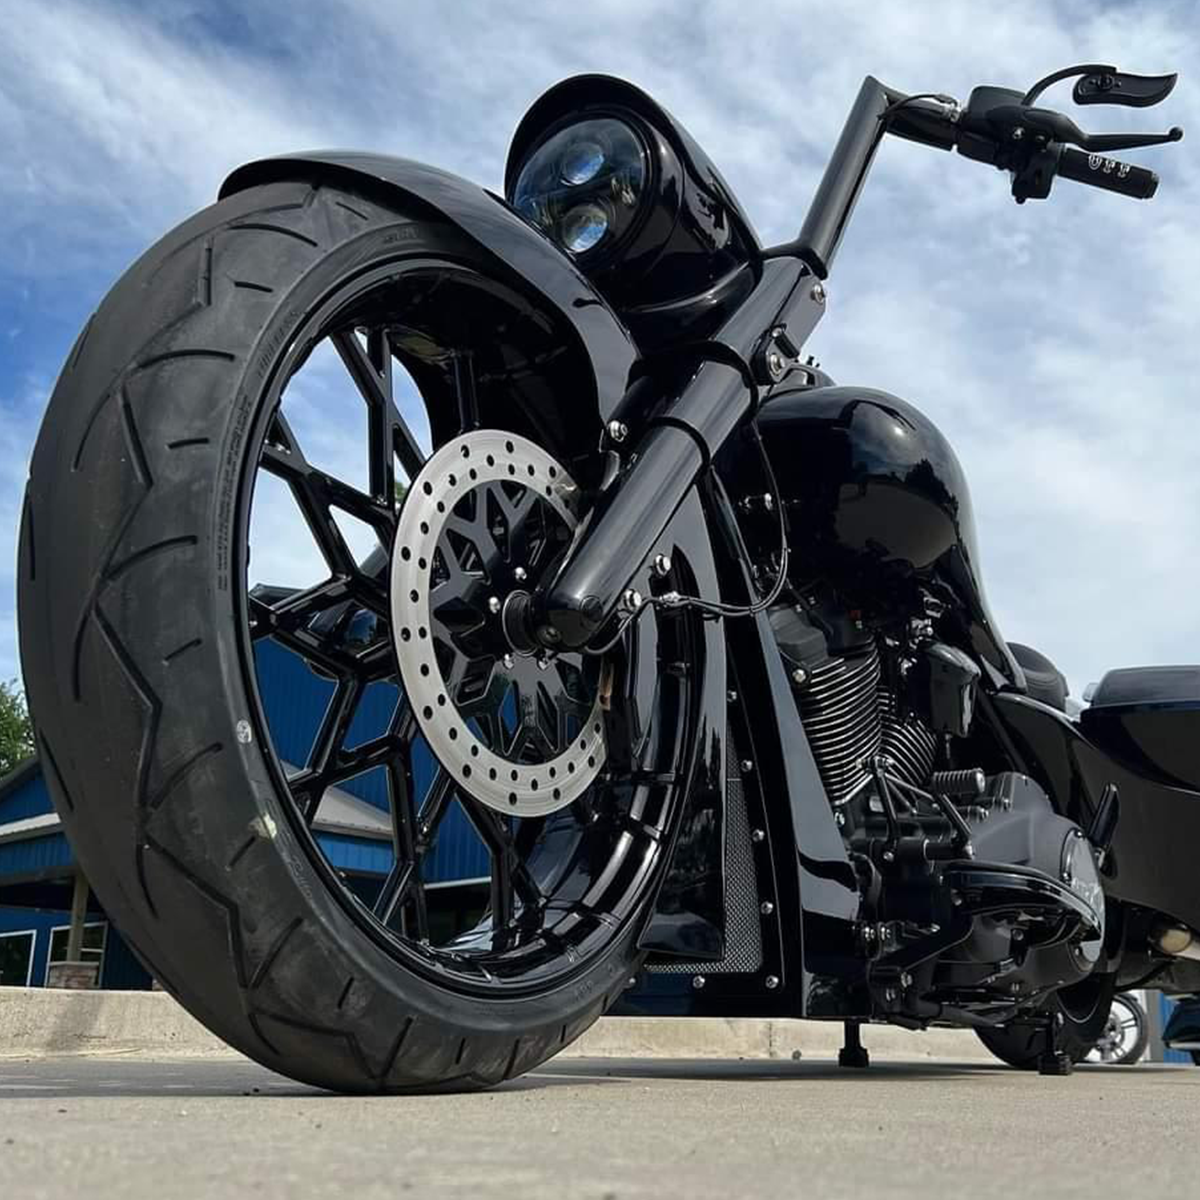 Harley custom Softail with SMT Bulldog OG5 fat tire wheel up front